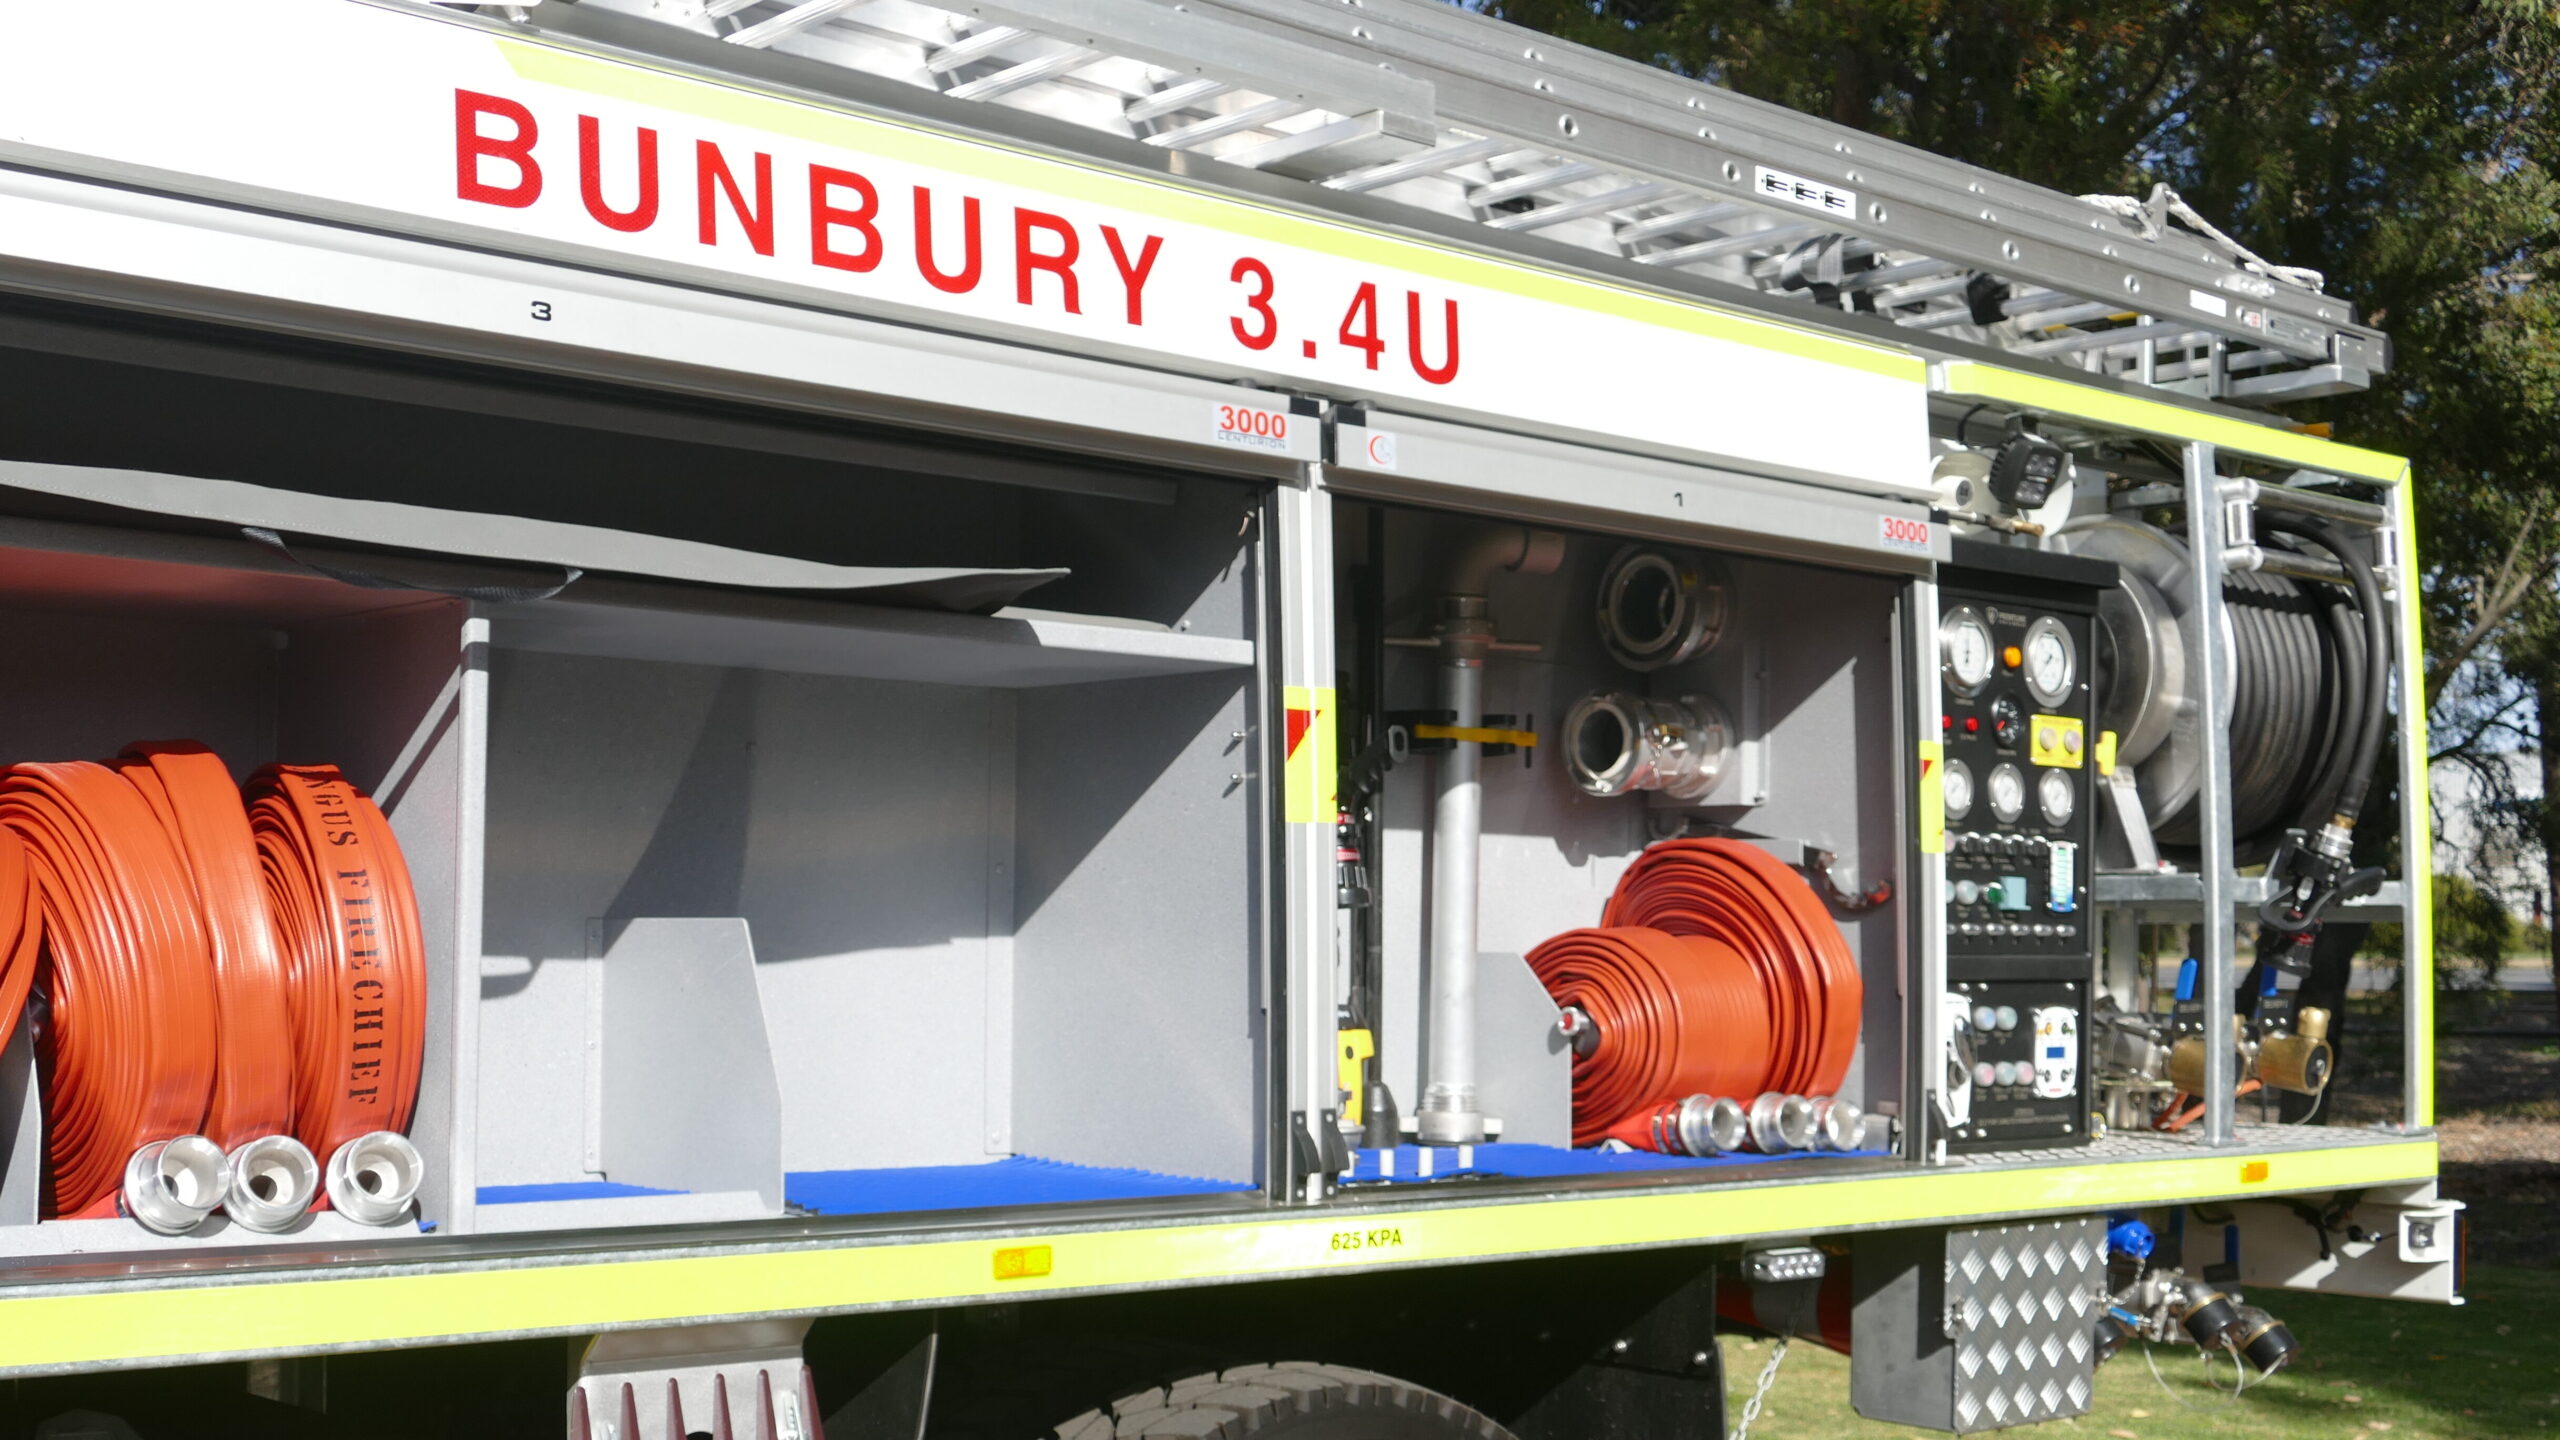 Close up of the Bunbury Volunteer Bushfire Brigade truck.